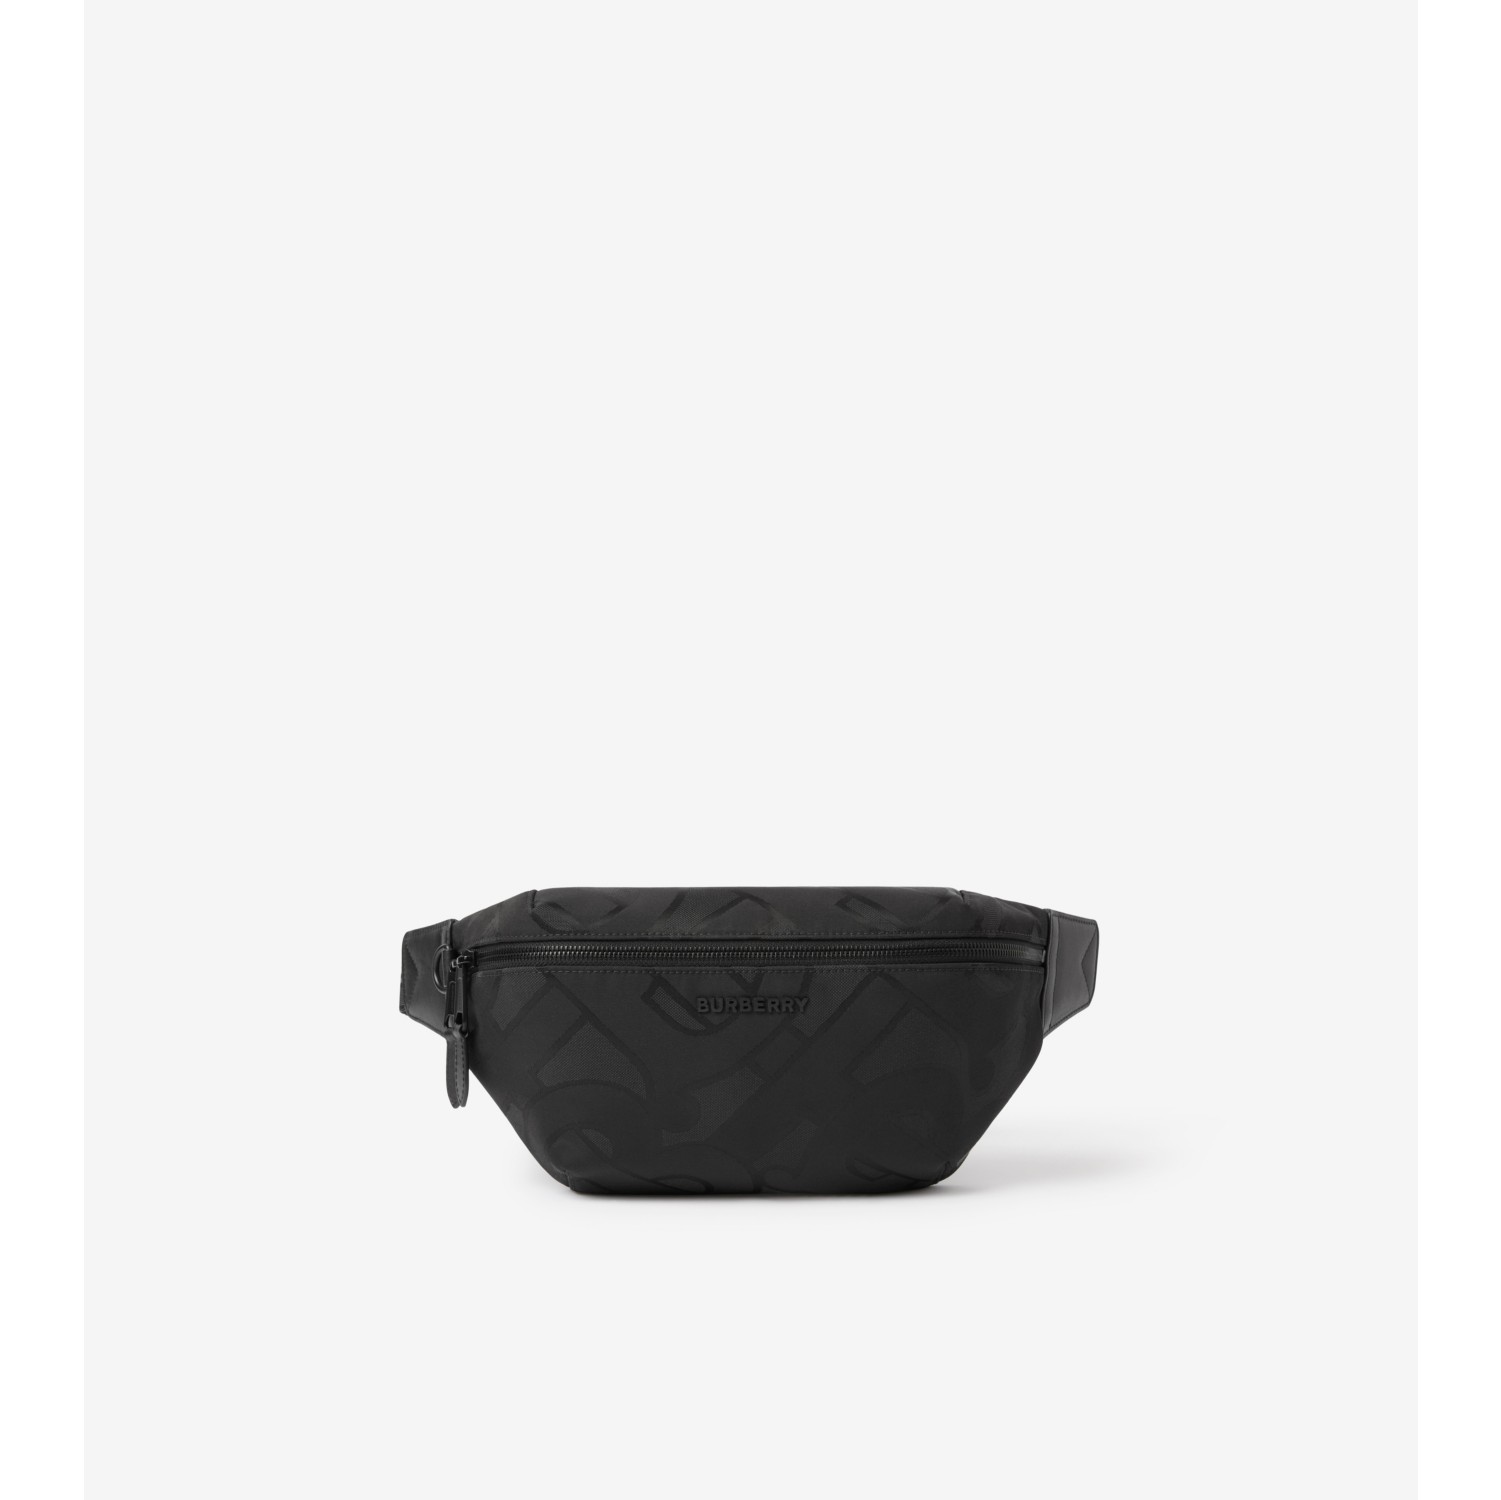 Burberry Black Leather TB Belt Bag